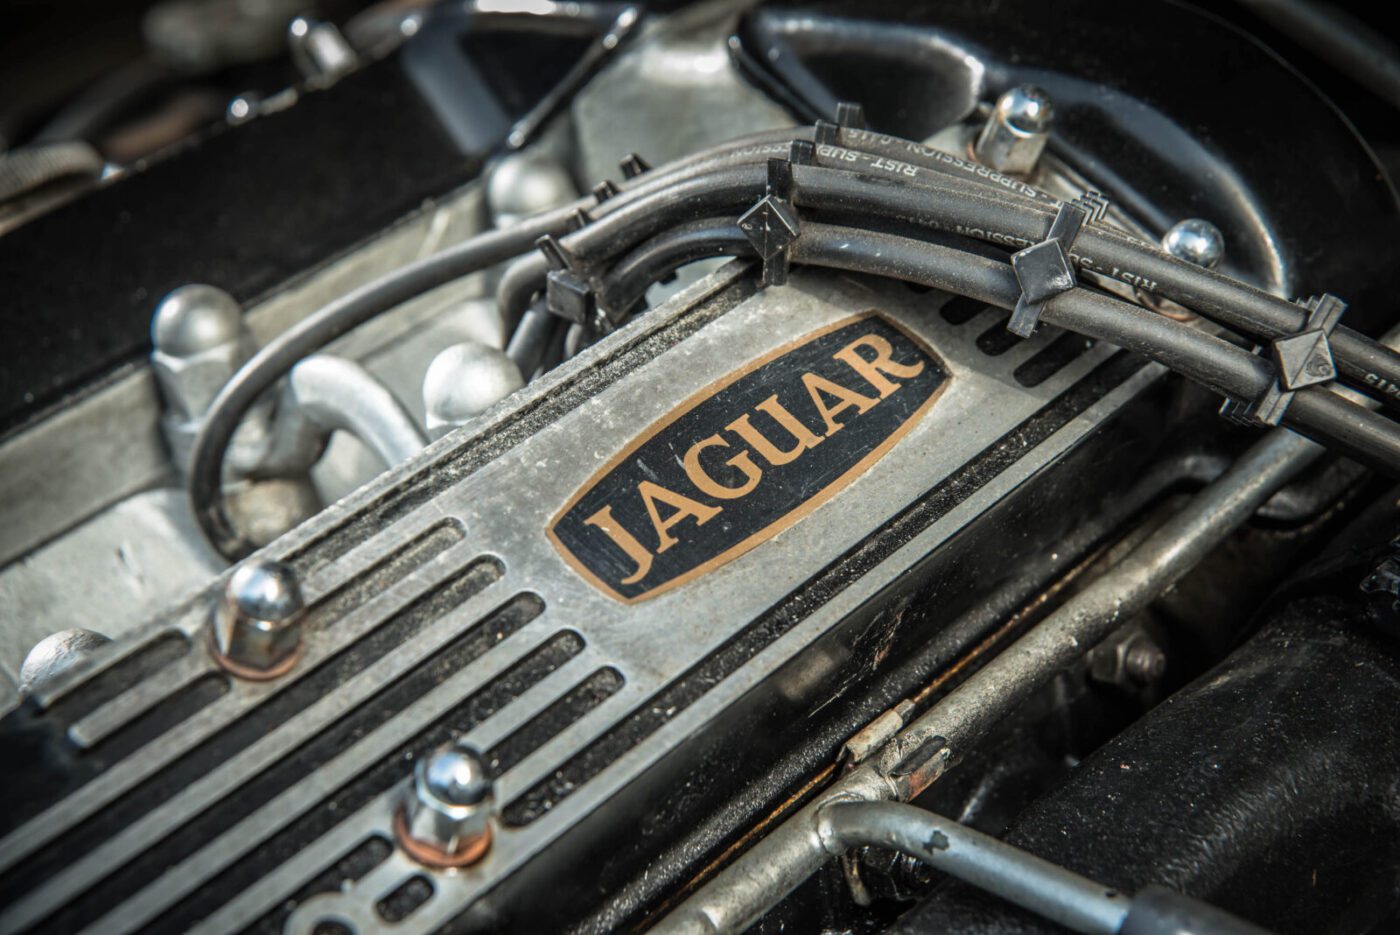 Jaguar XJ6 engine detail